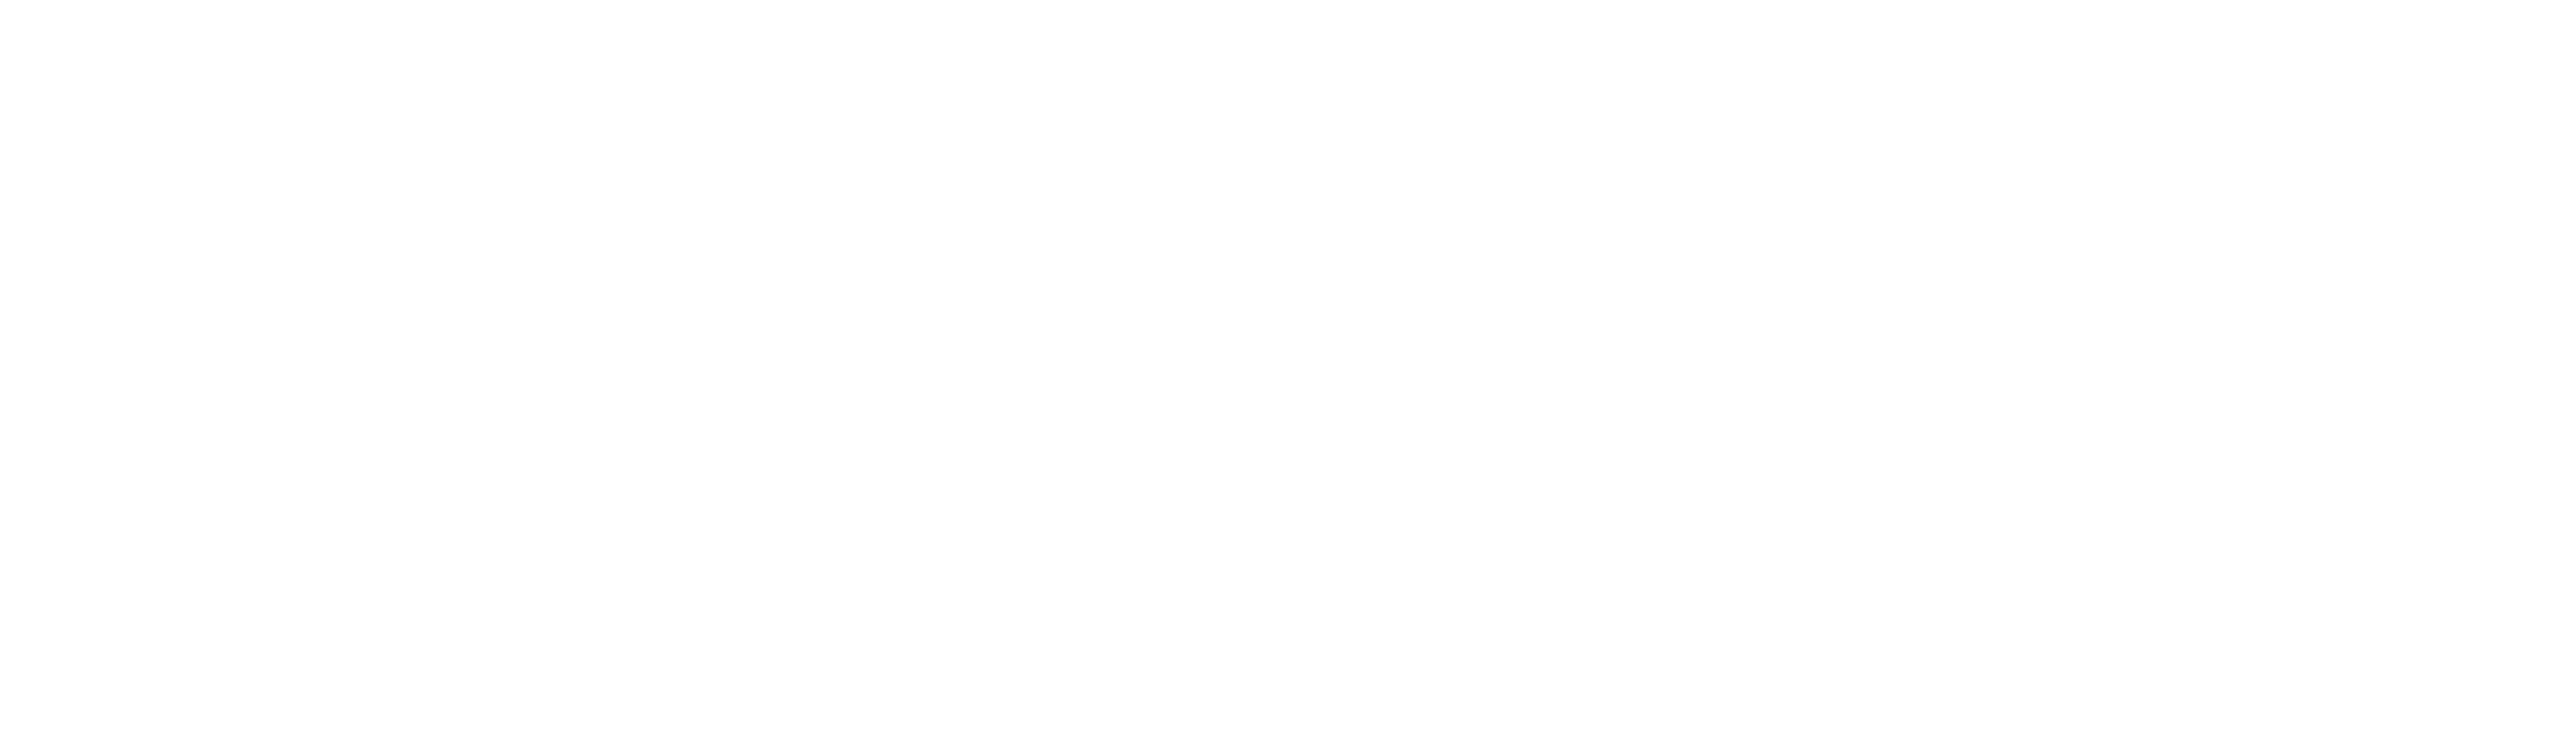 CELESTE logo